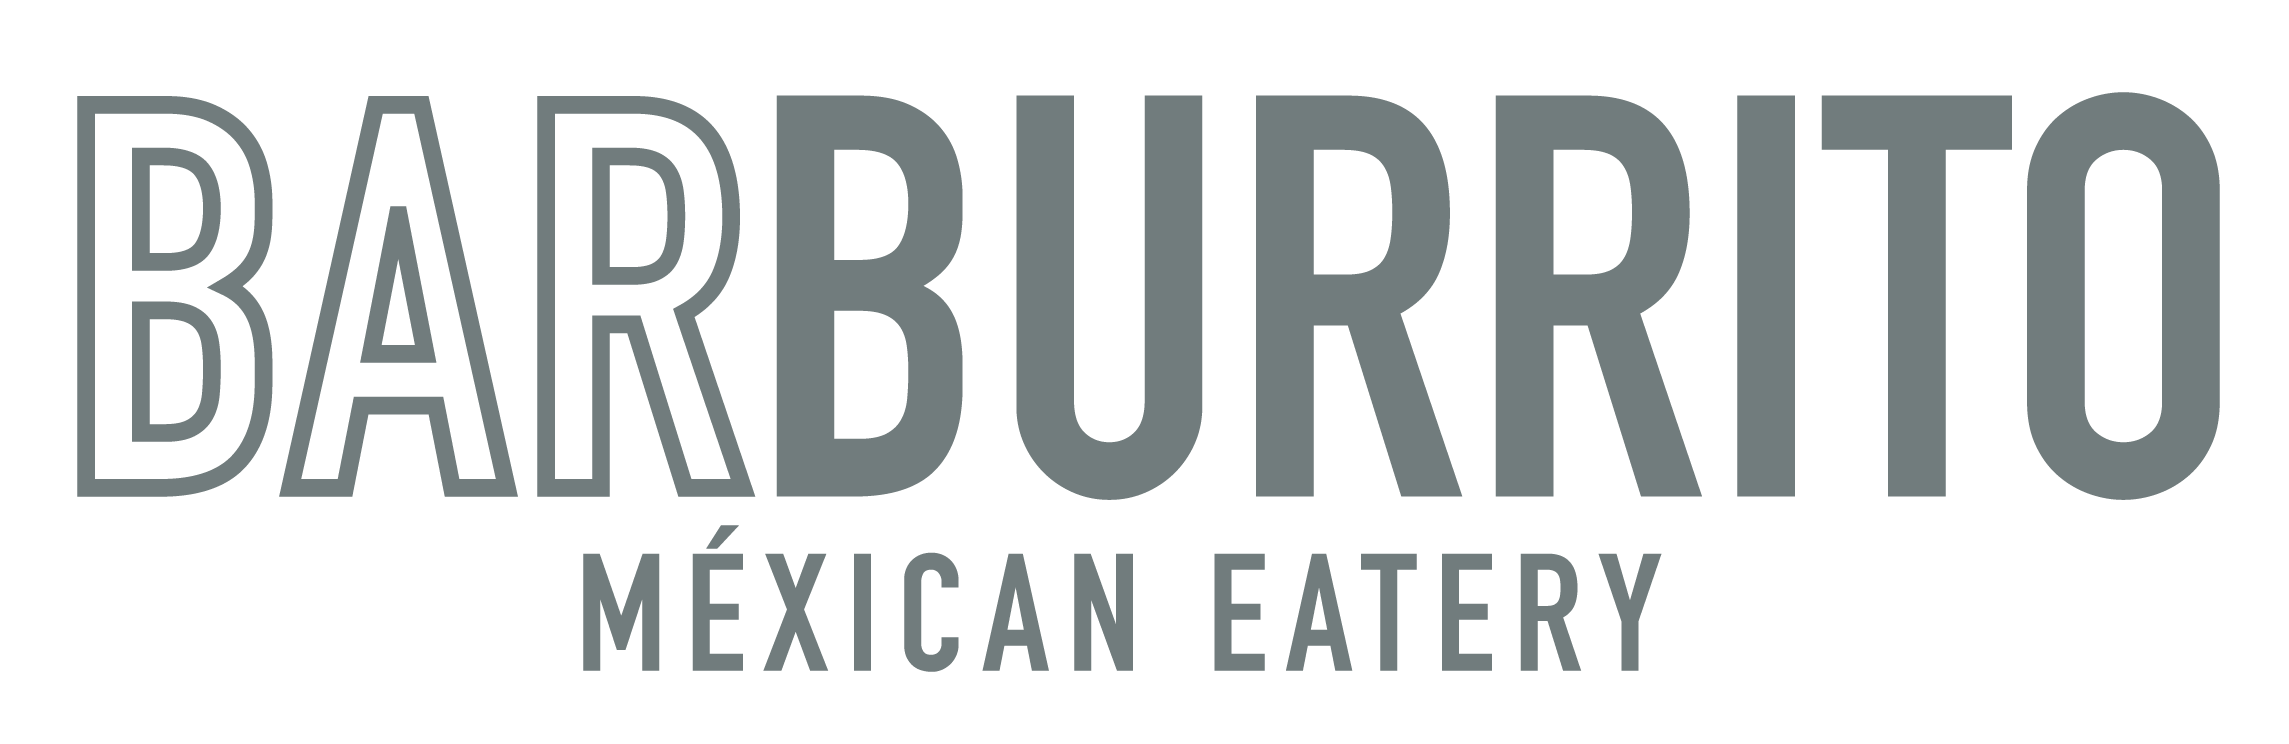 Barburrito Mexican Eatery Logo